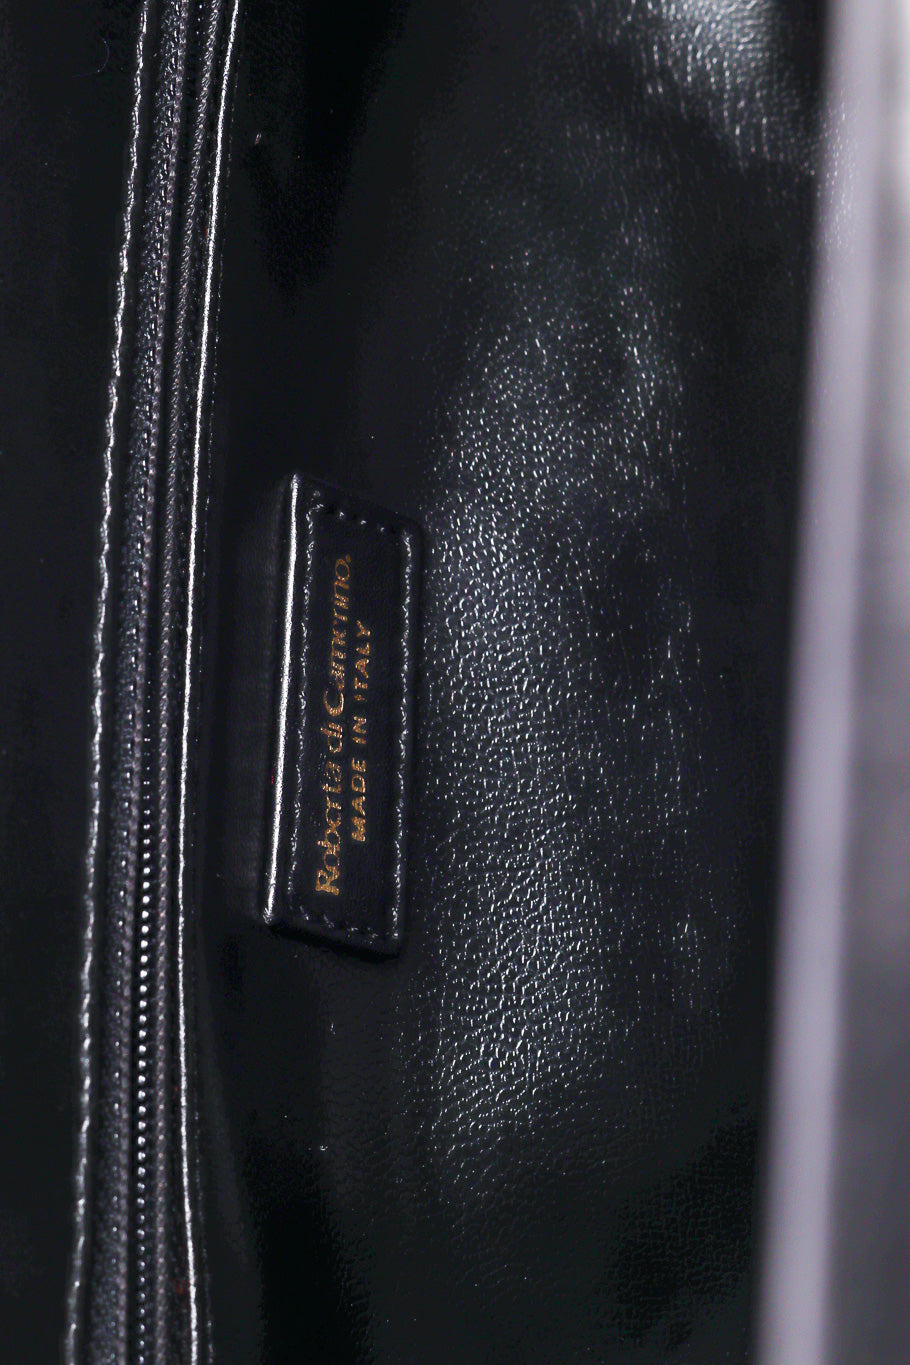 Velvet handbag by Roberta di Camerino on label  @recessla